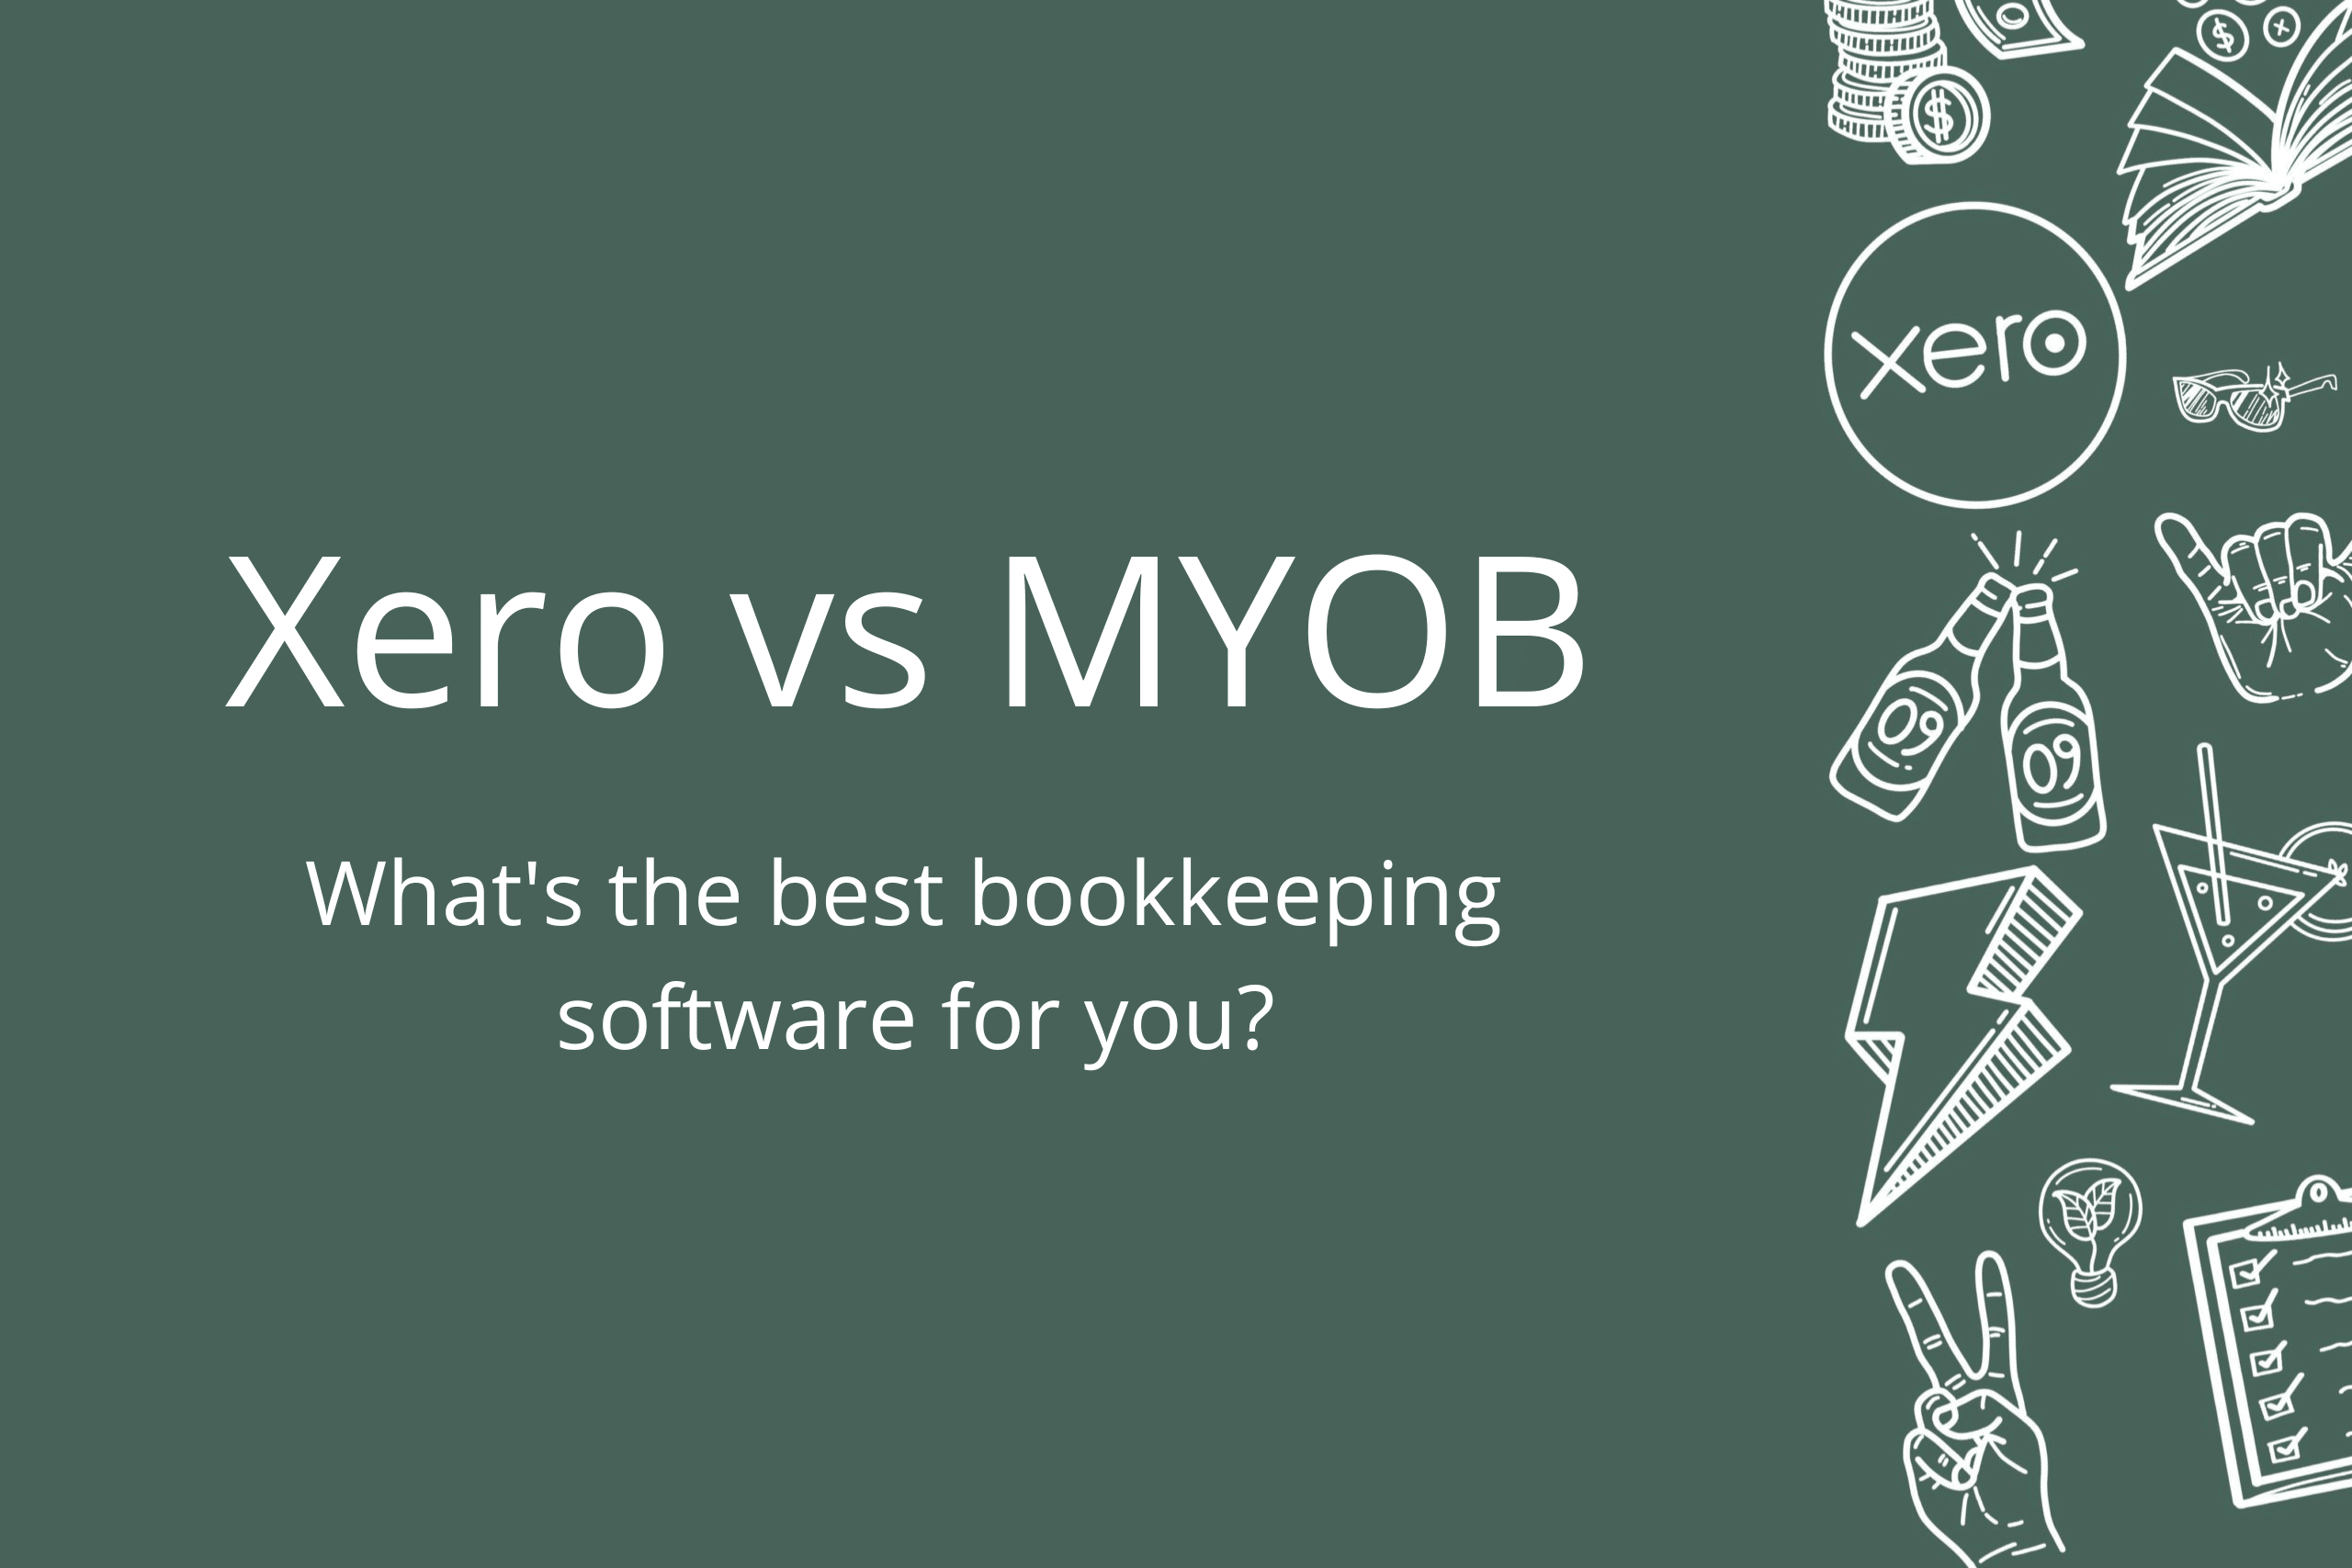 Xero vs MYOB